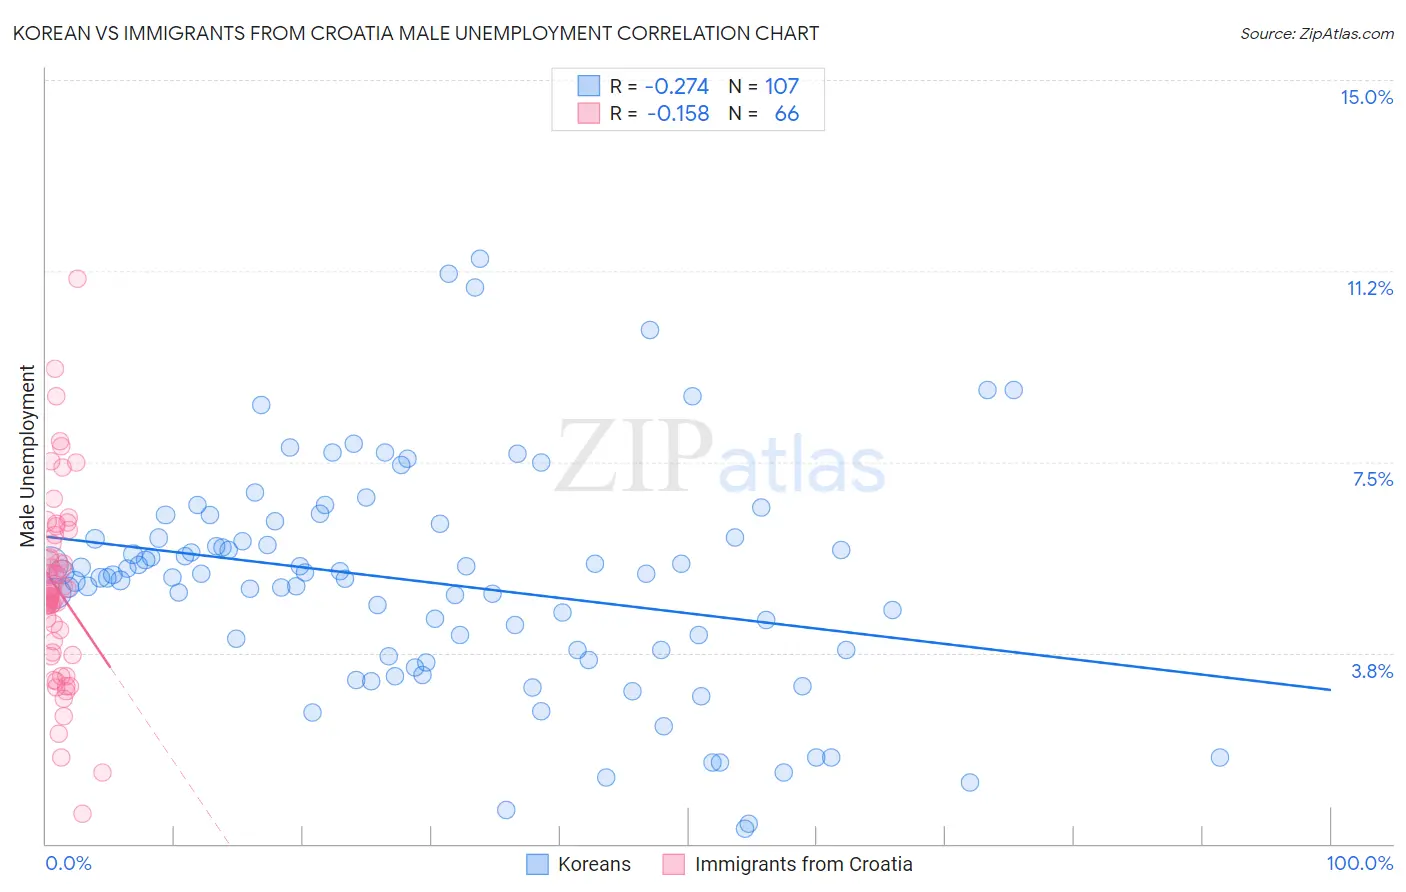 Korean vs Immigrants from Croatia Male Unemployment